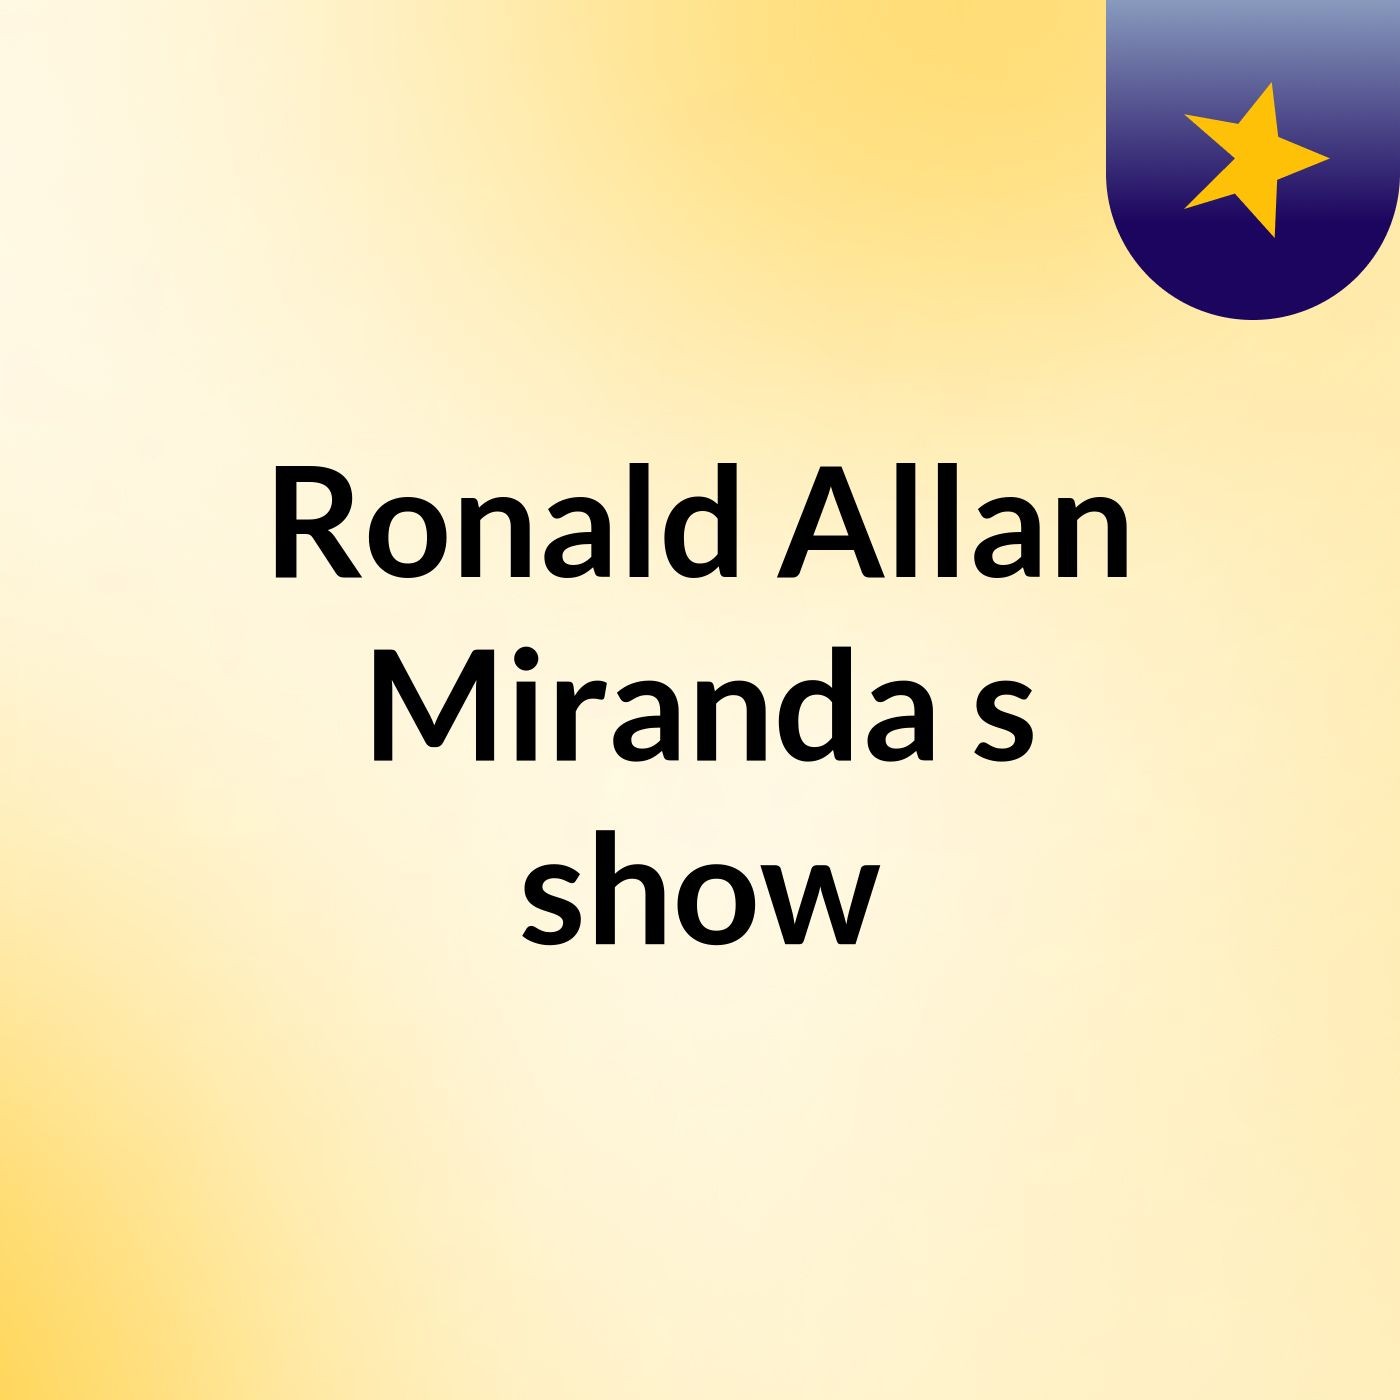 Ronald Allan Miranda's show